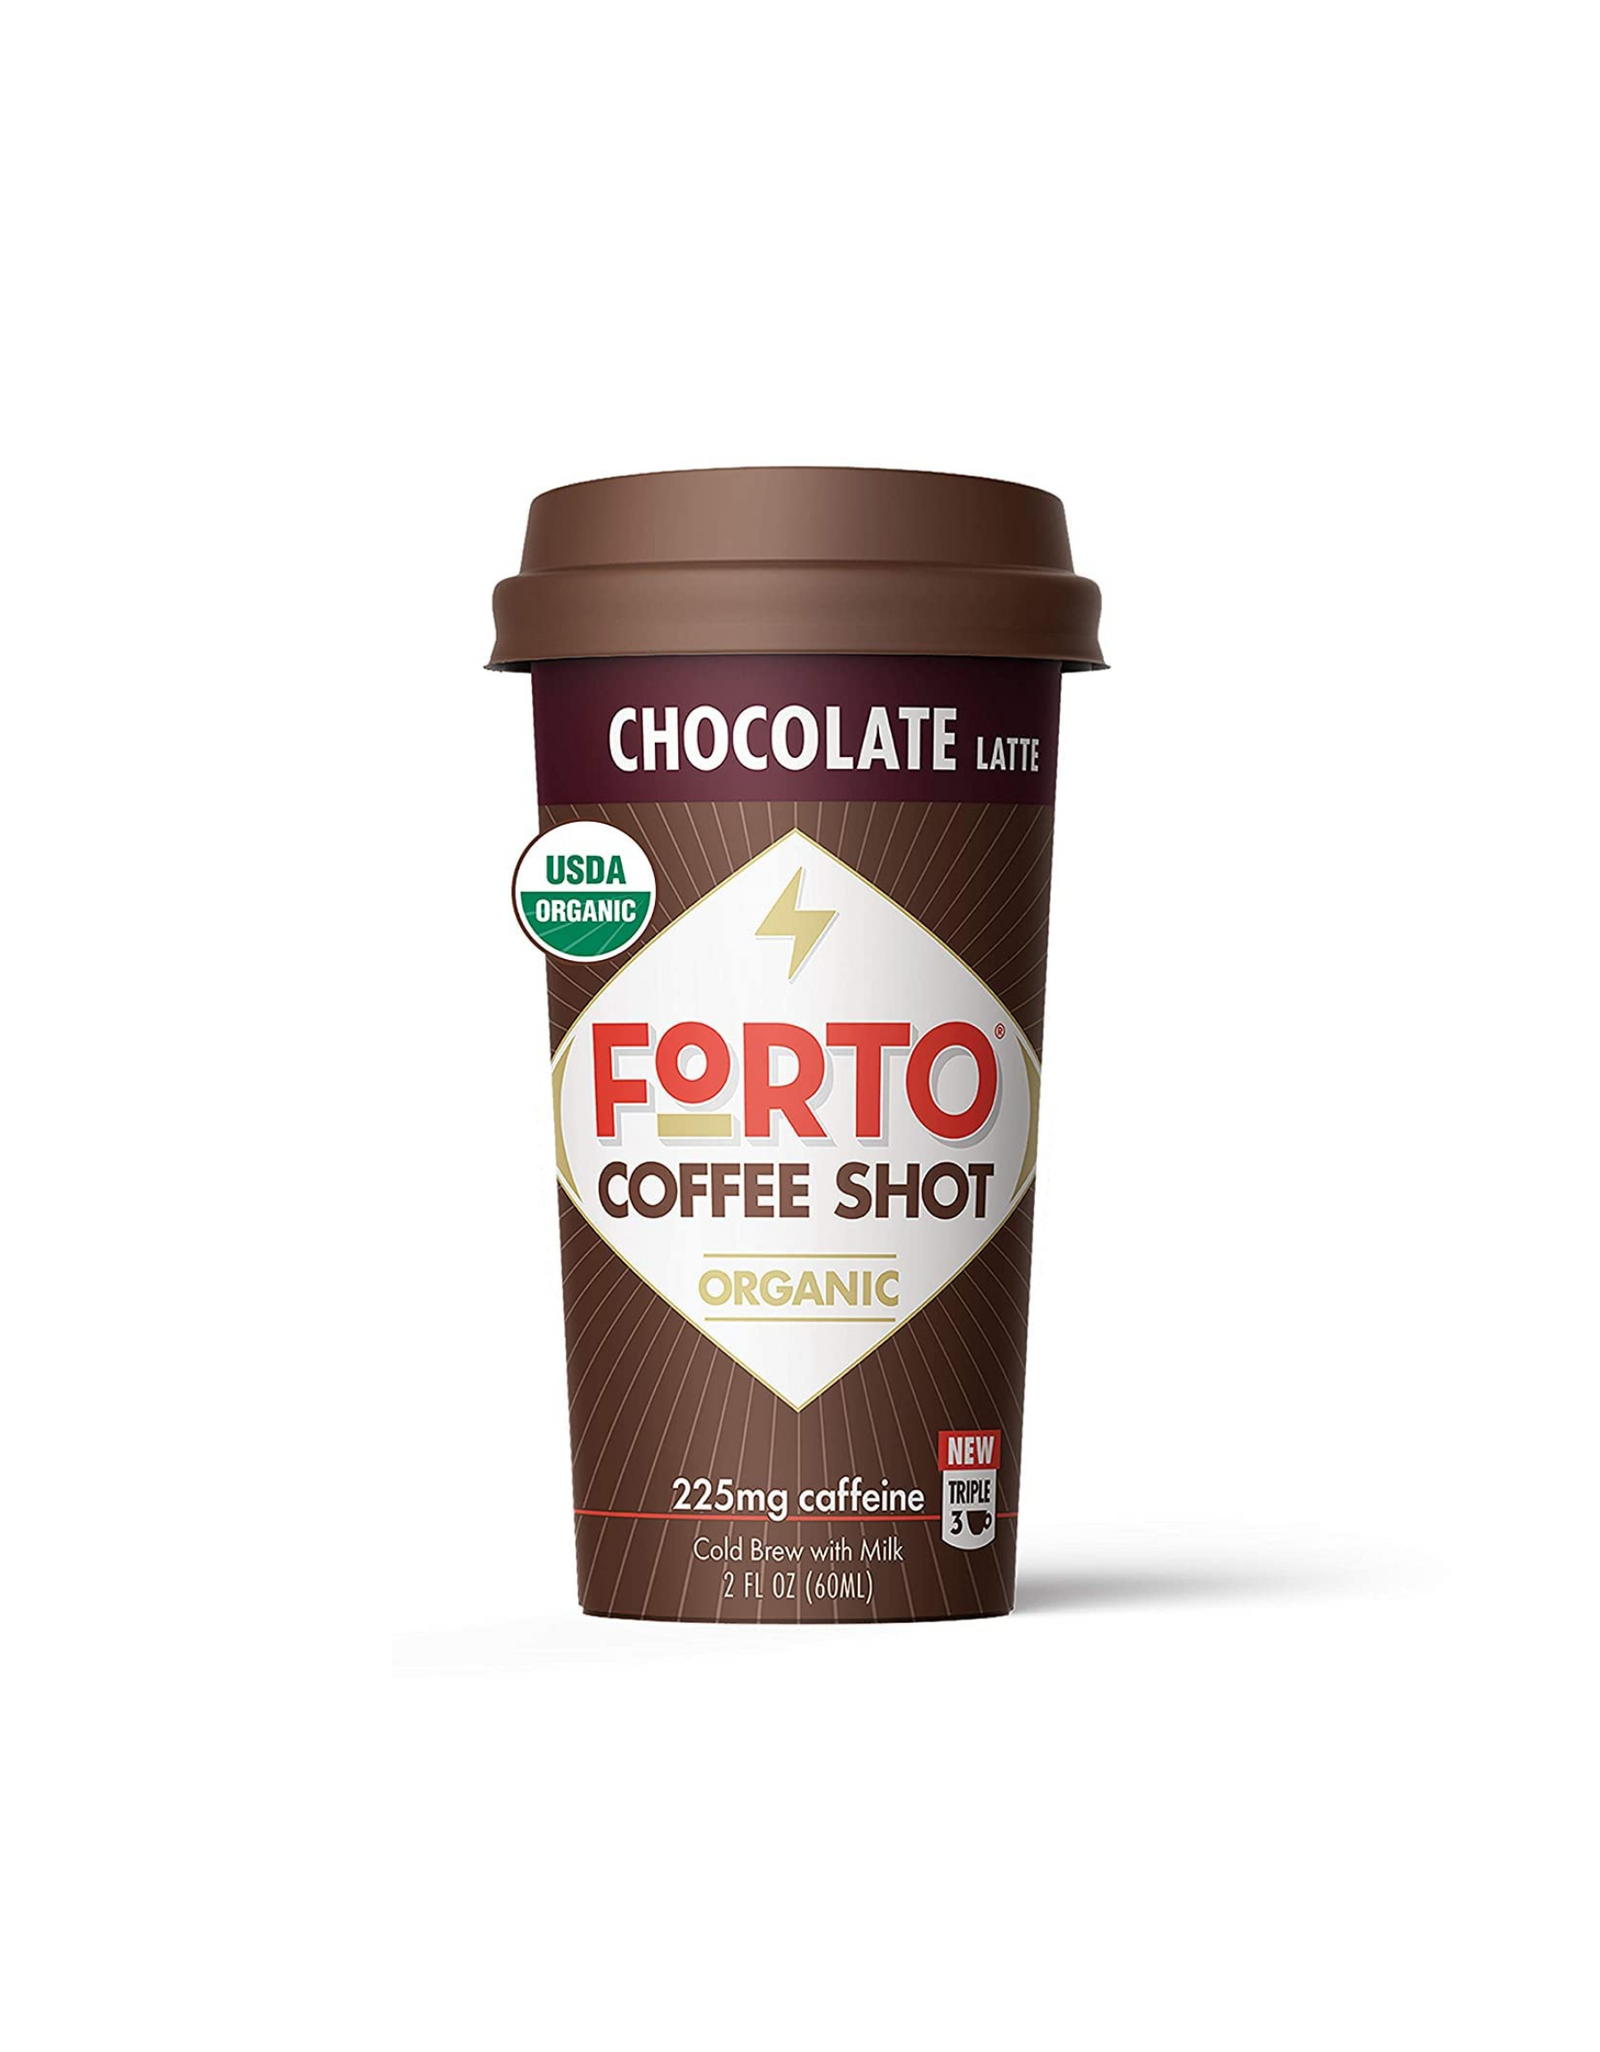 FORTO Coffee Shots - Chocolate Latte, Organic, 2 fl oz (Pack of 12)